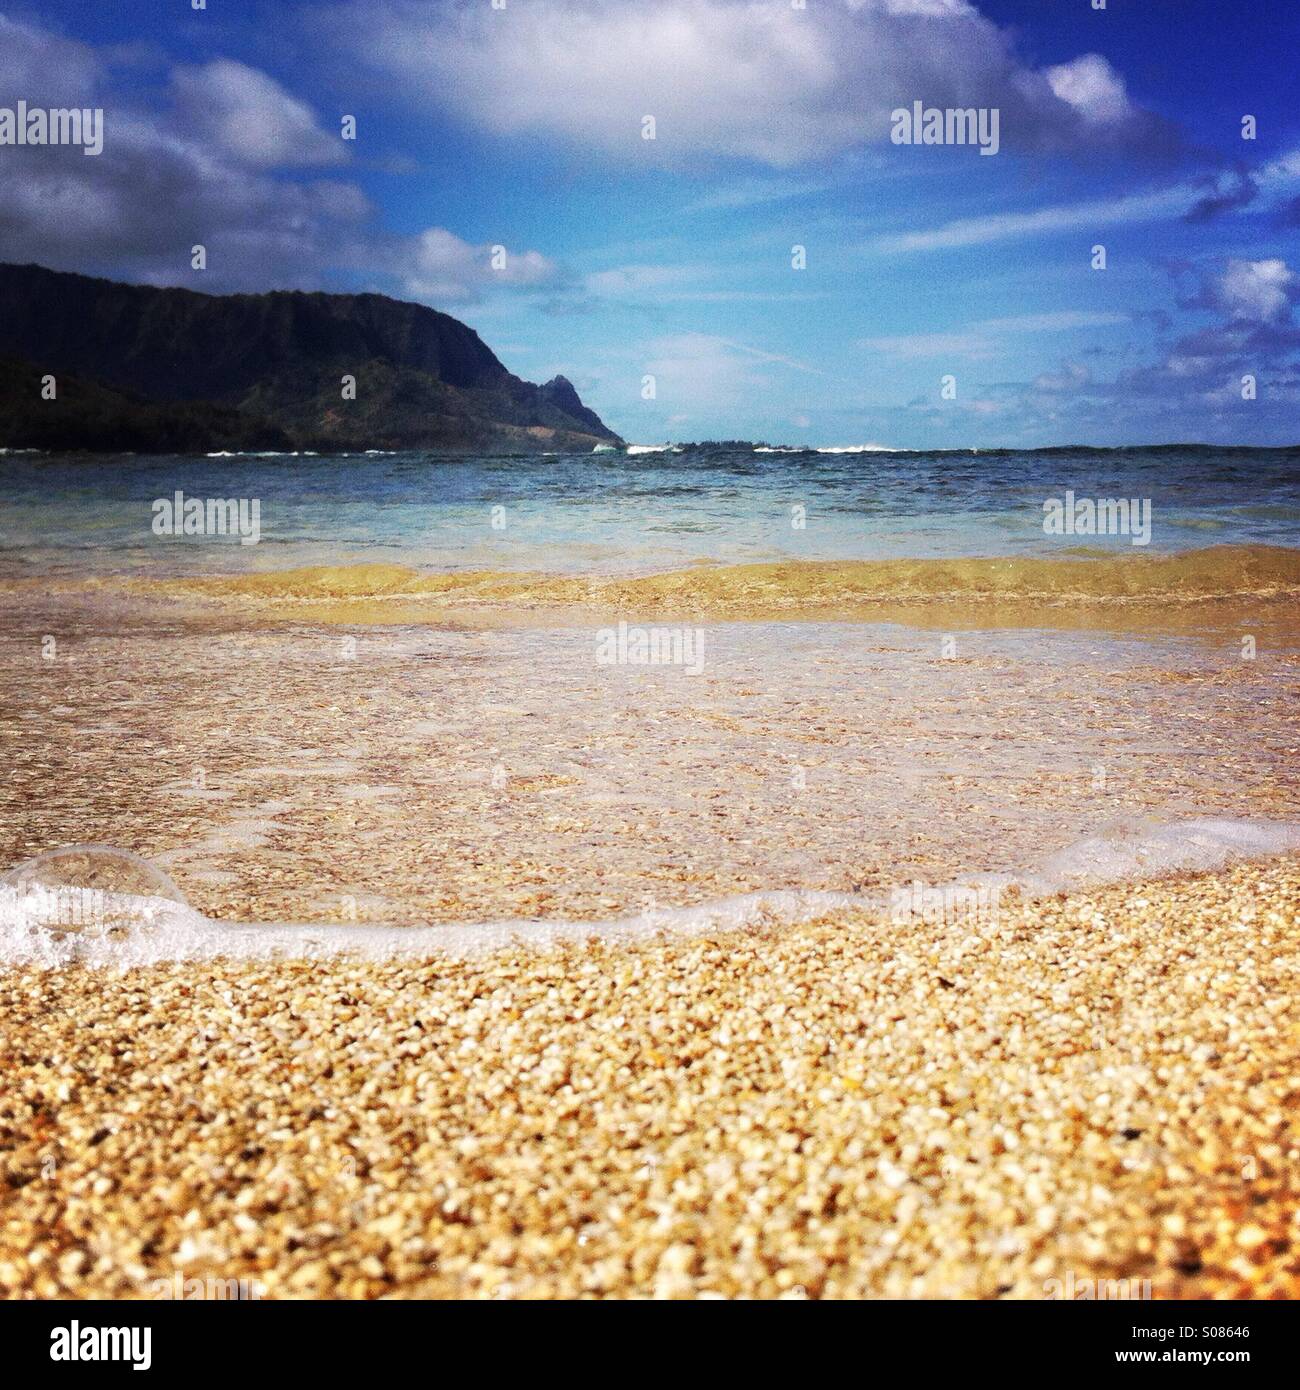 A view of sand, waves, Bali Hai, and Hanalei Bay from the beach at the St. Regis Kauai. Kauai Hawaii USA. Stock Photo